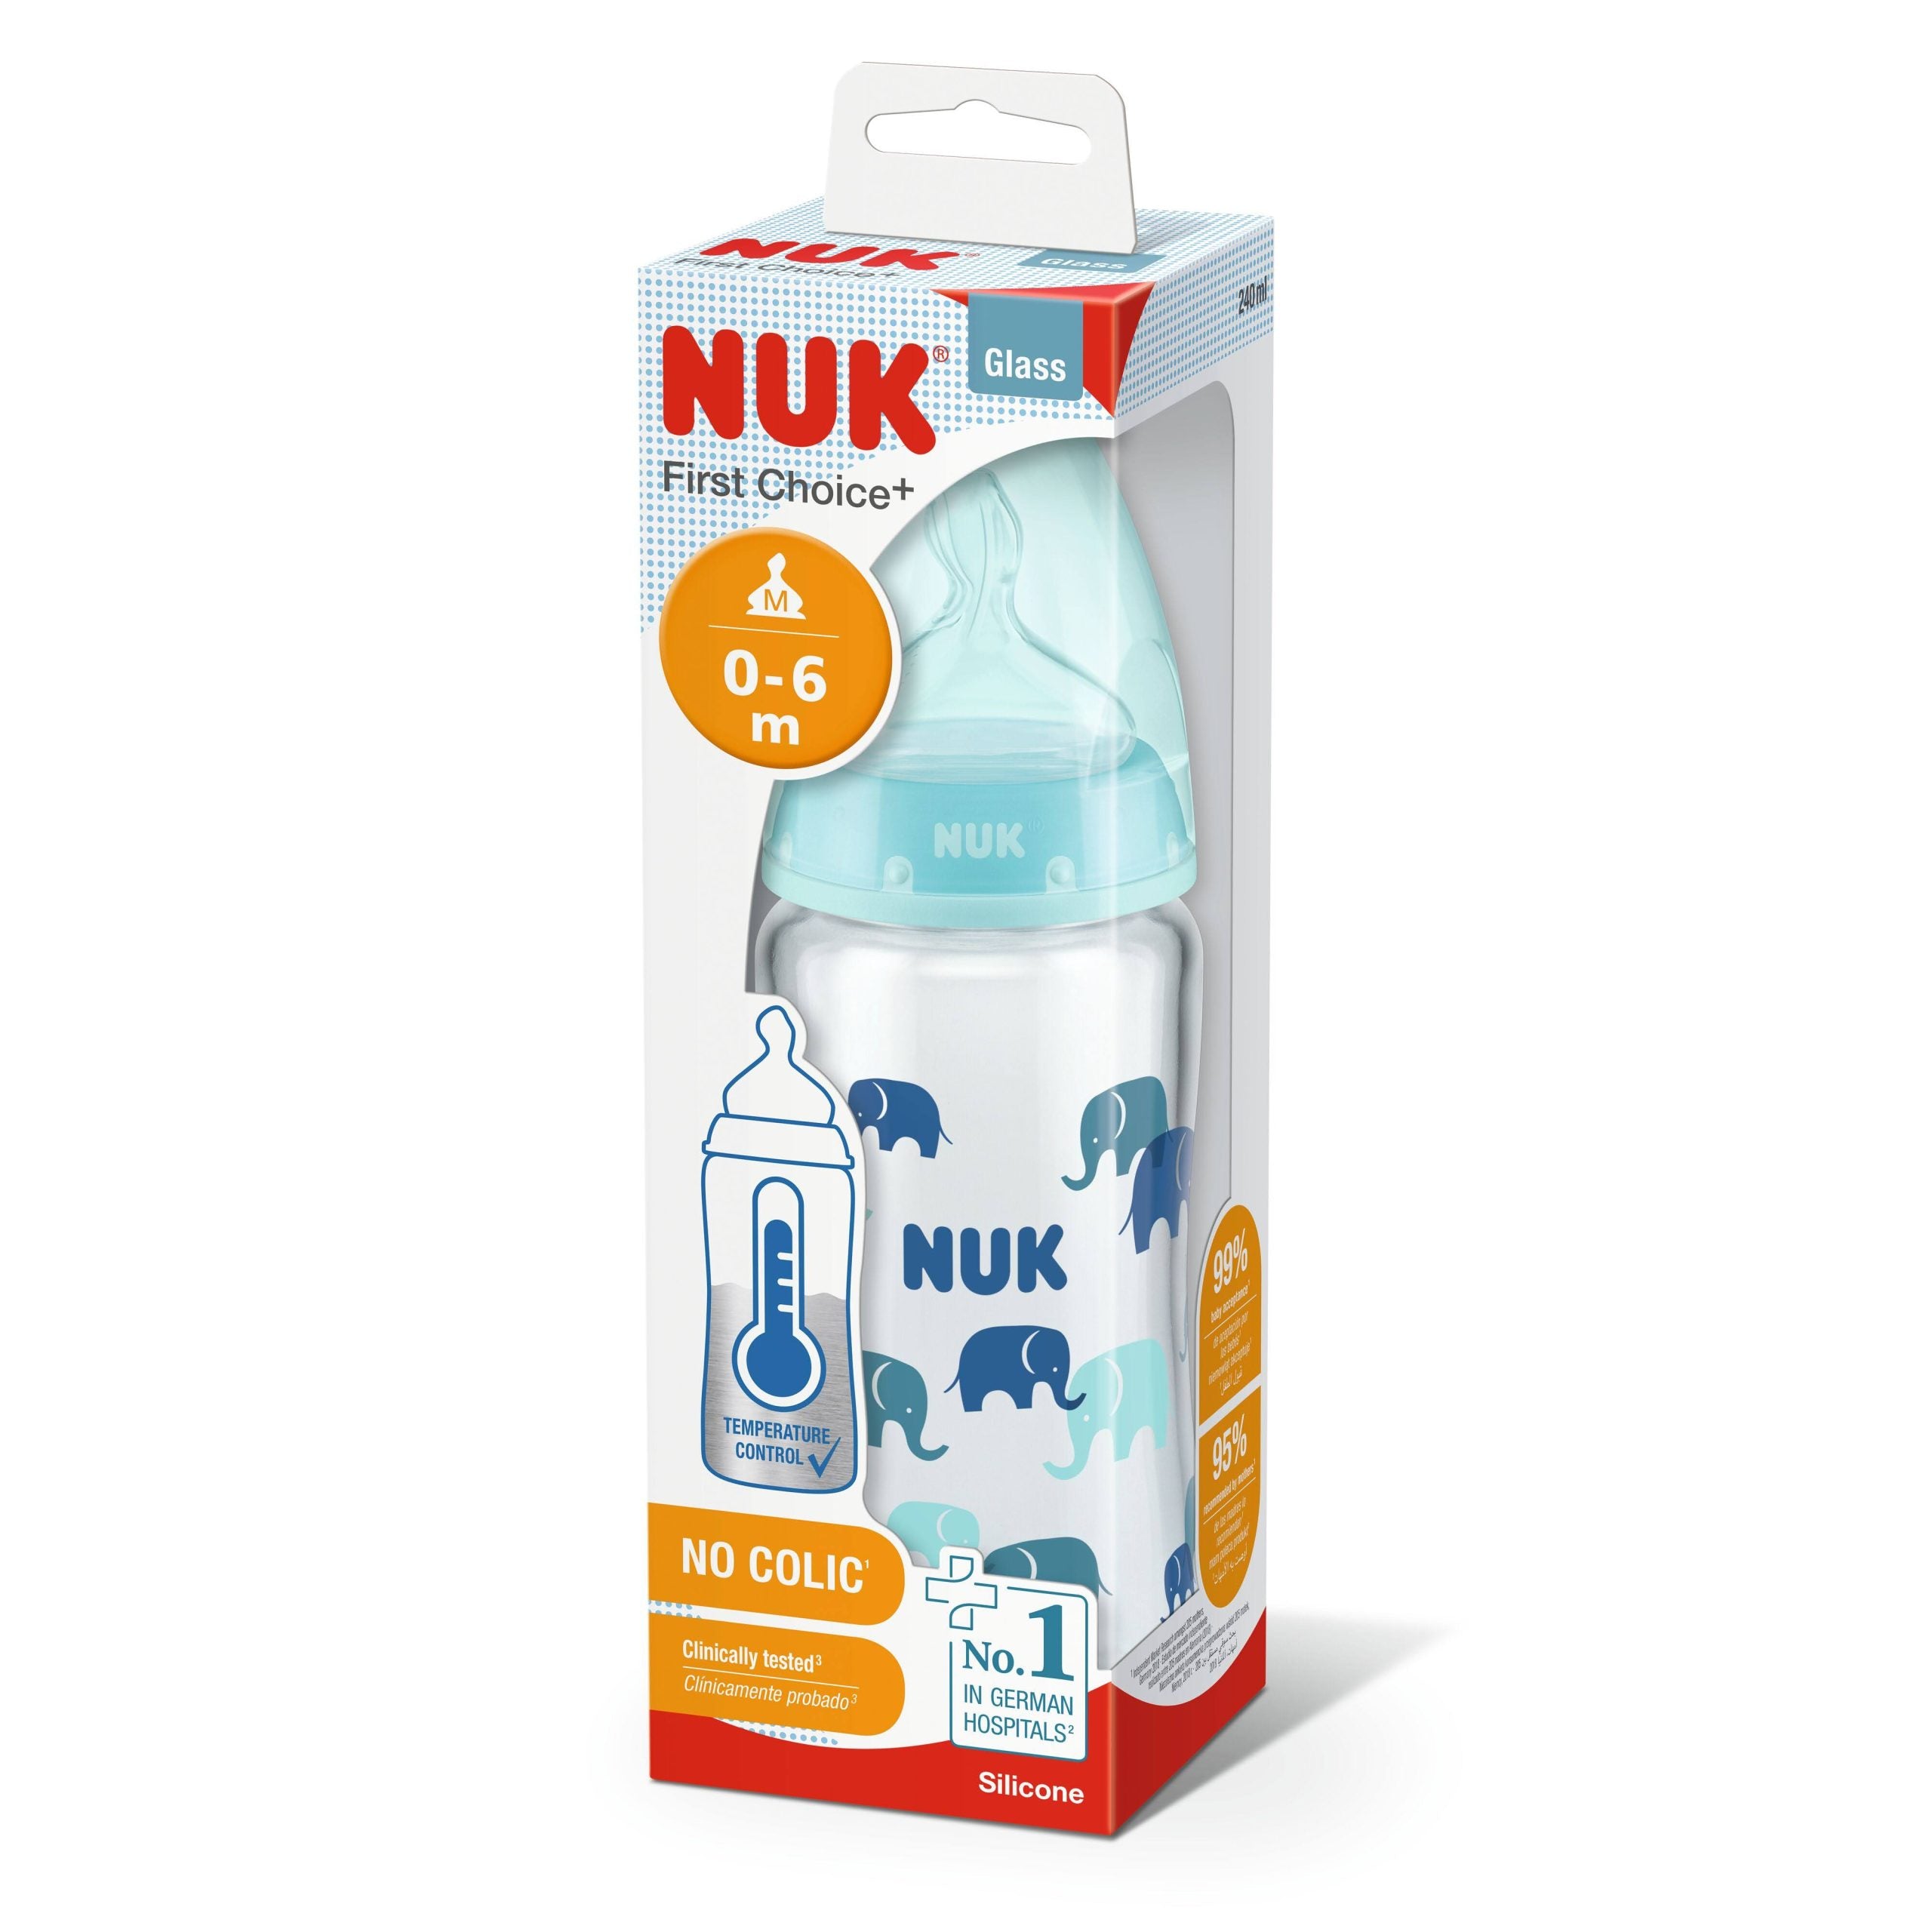 NUK First Choice + Glass Feeding Bottle 240ml